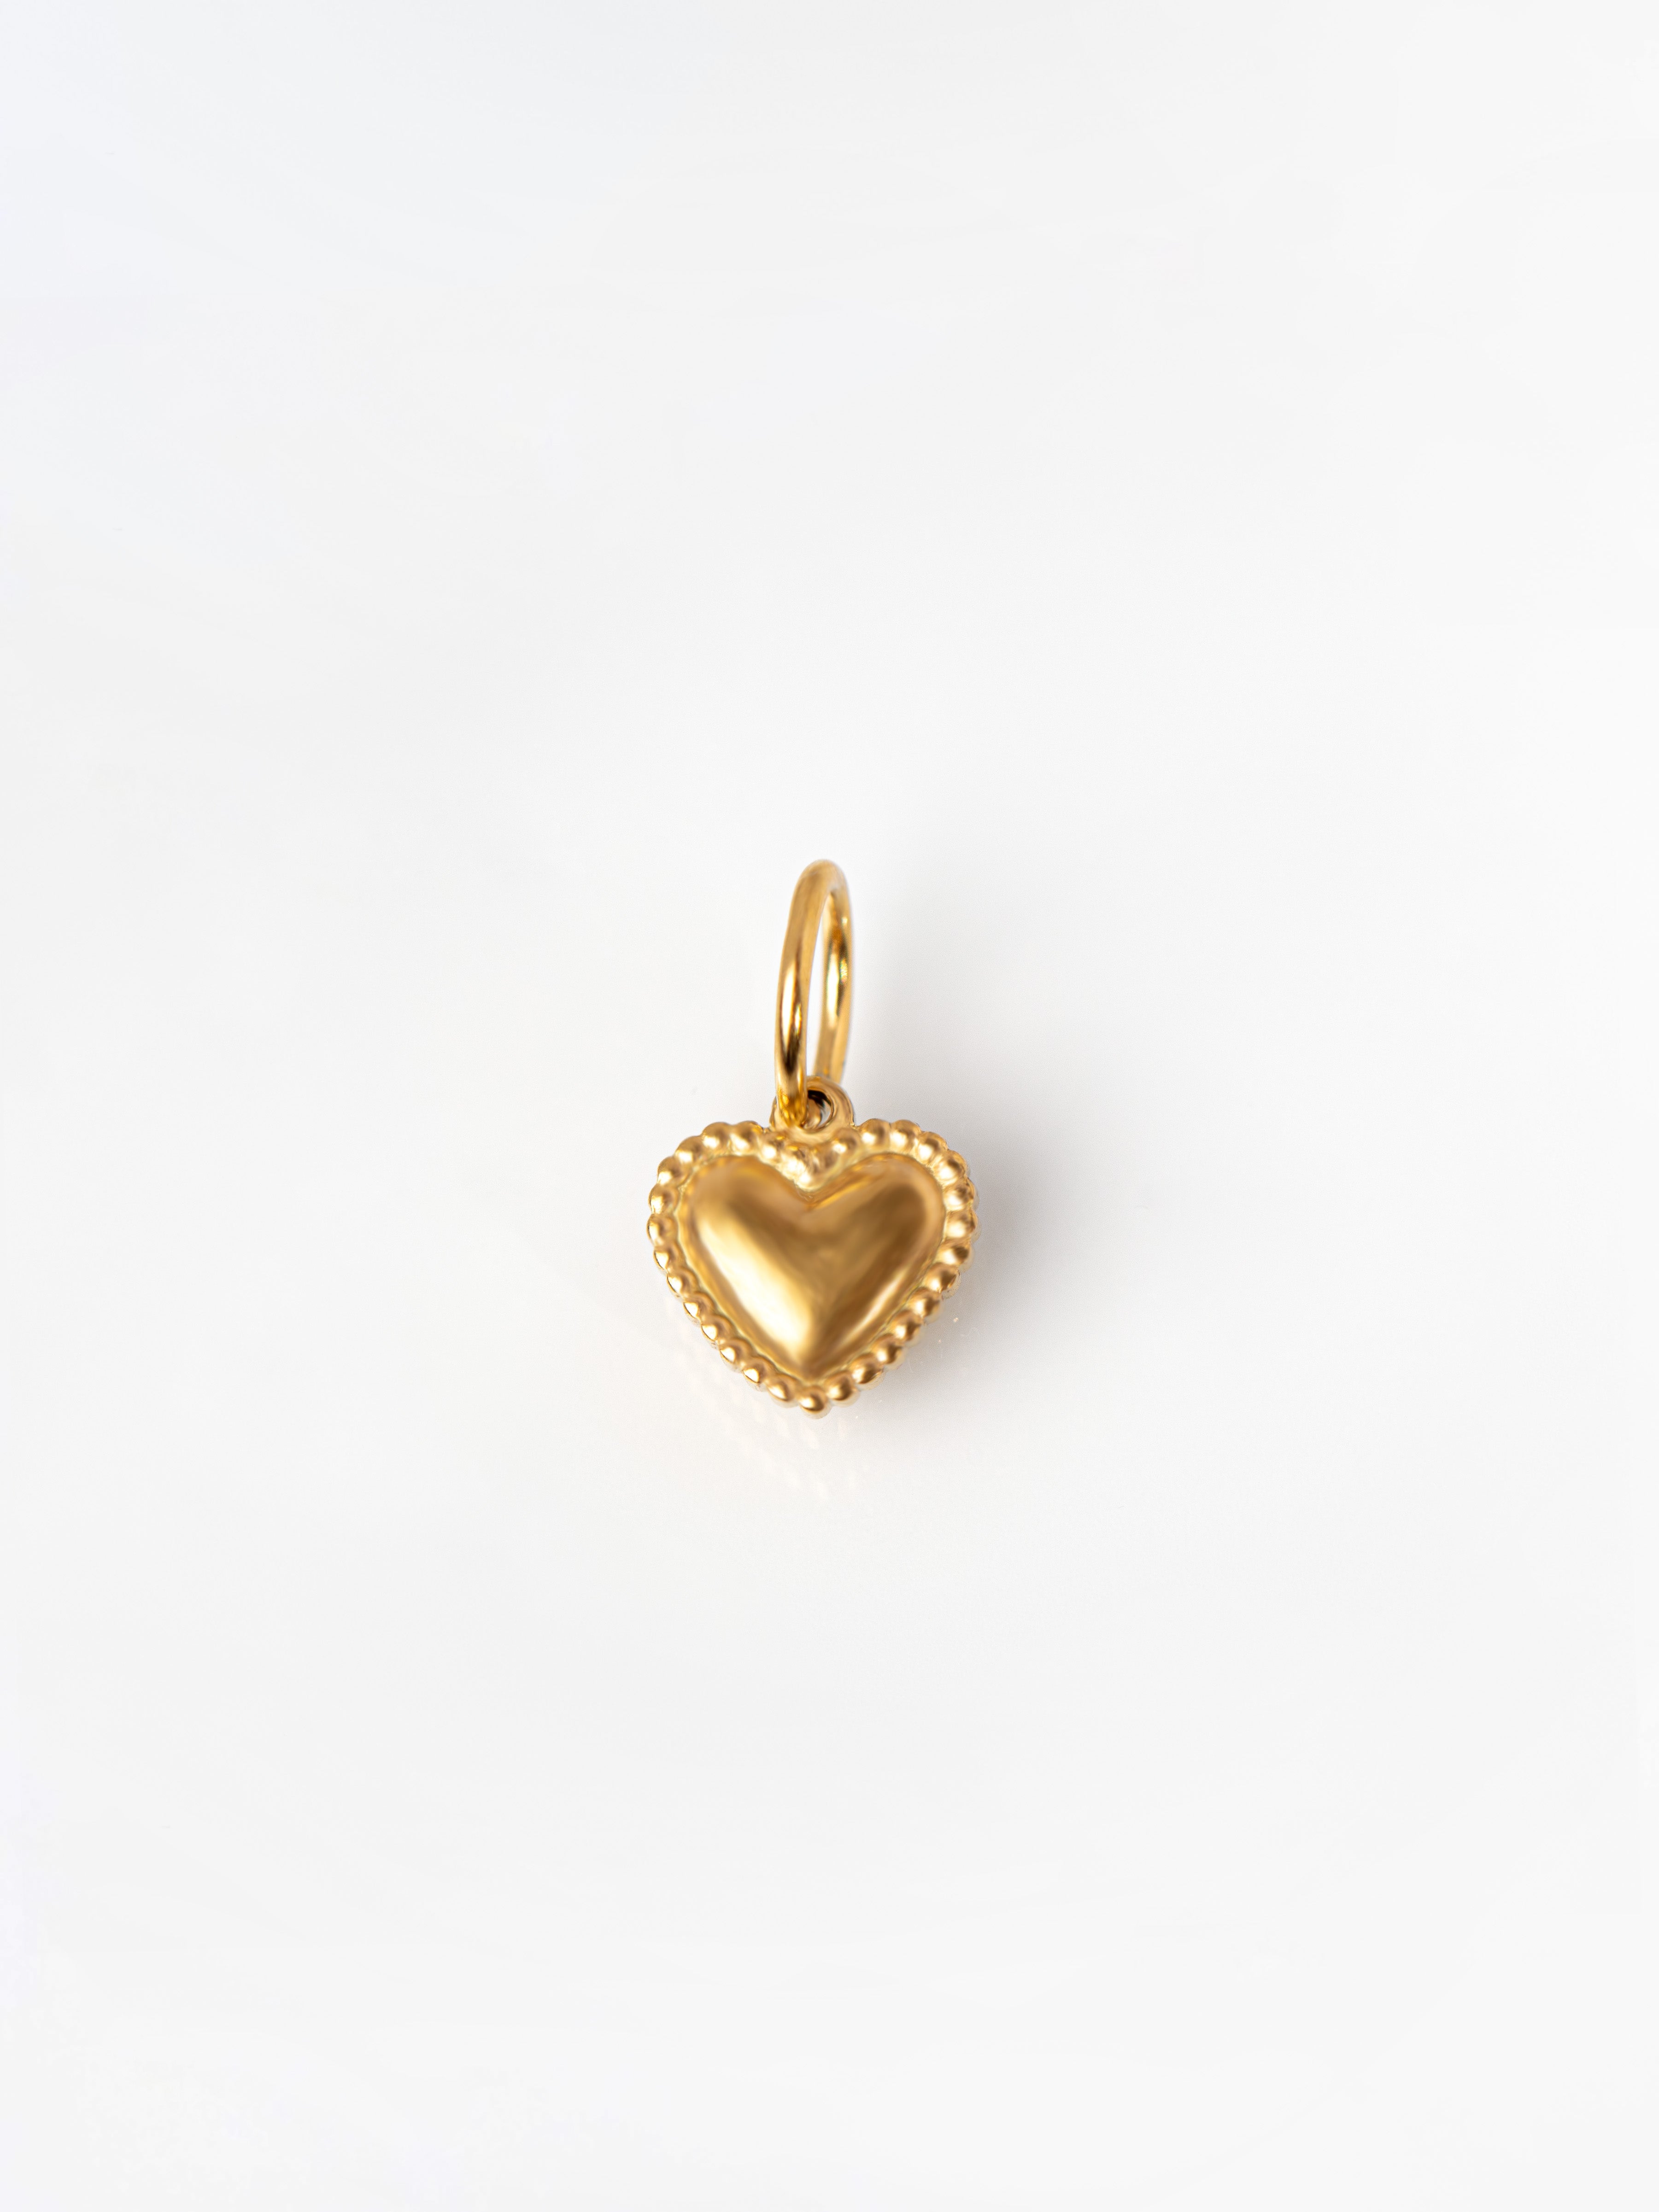 Gold Tiny Bobble Heart Pendant / Charm